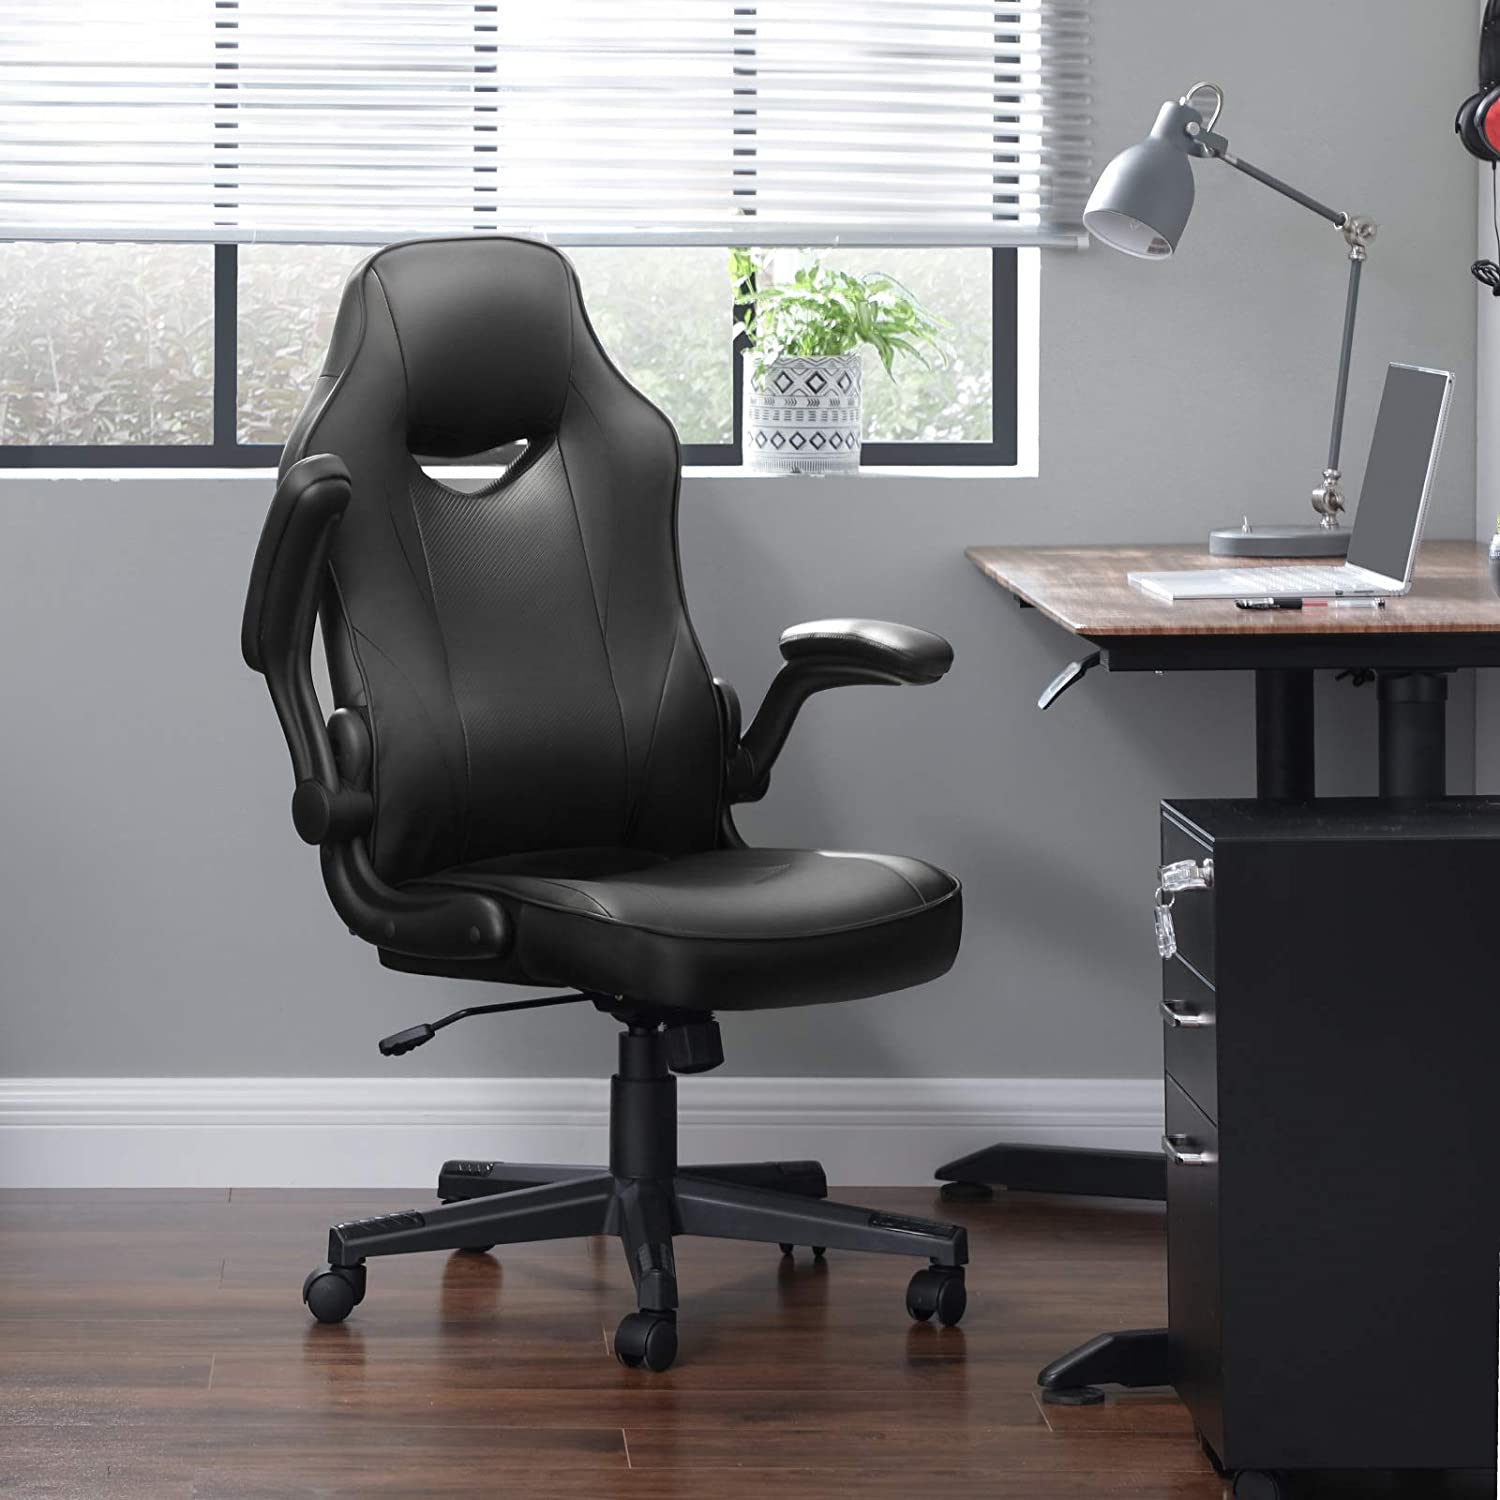 Nancy's Bathgate Office Chair - Ergonomic Office Chair - Office Chair For Adults - Black - 75 x 64 x (110-120) cm (L x W x H)